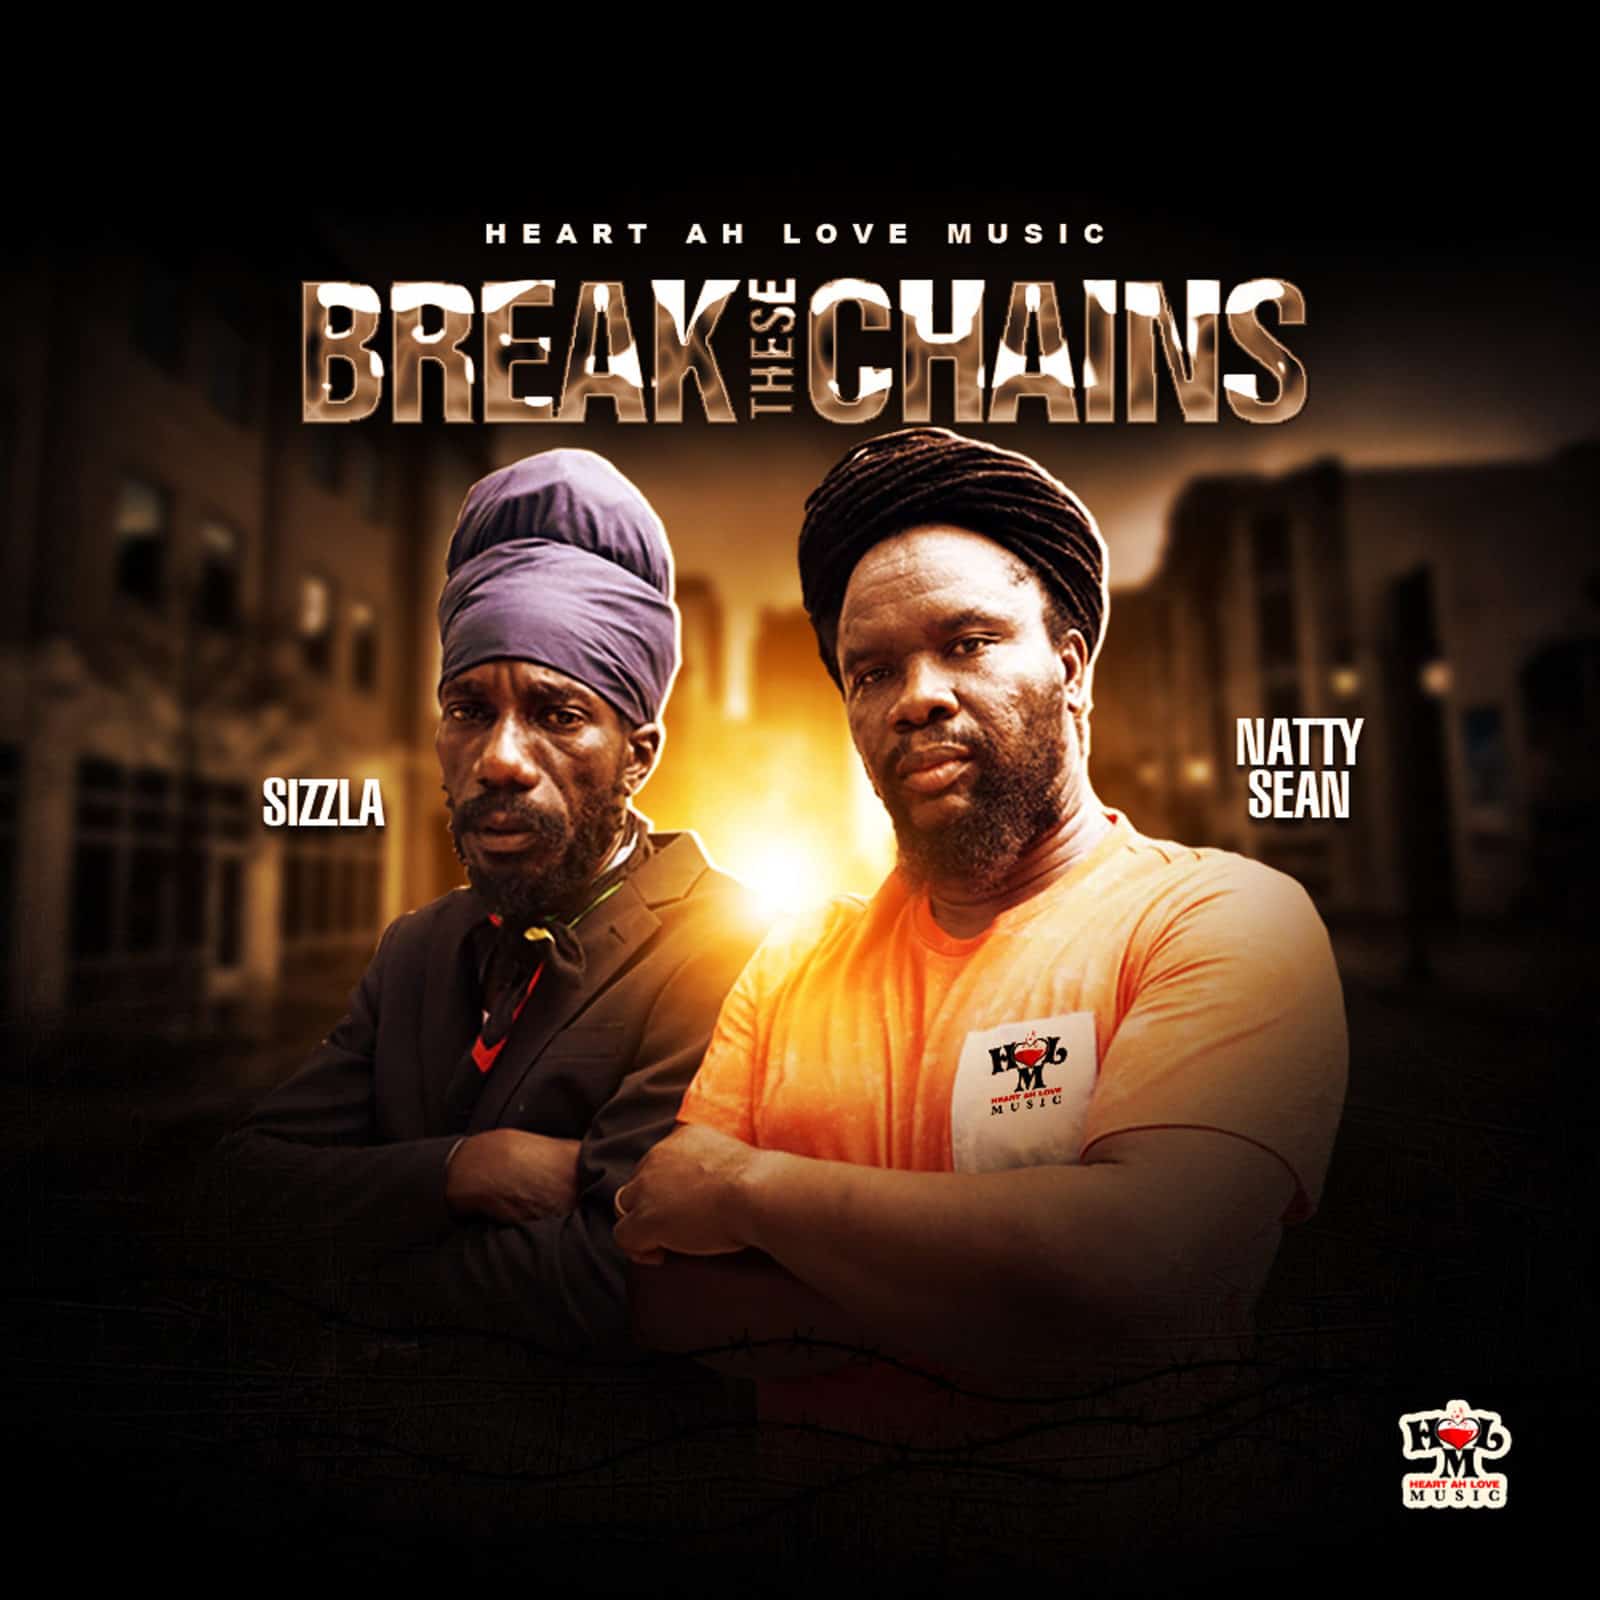 Natty Sean and Sizzla - Break These Chains